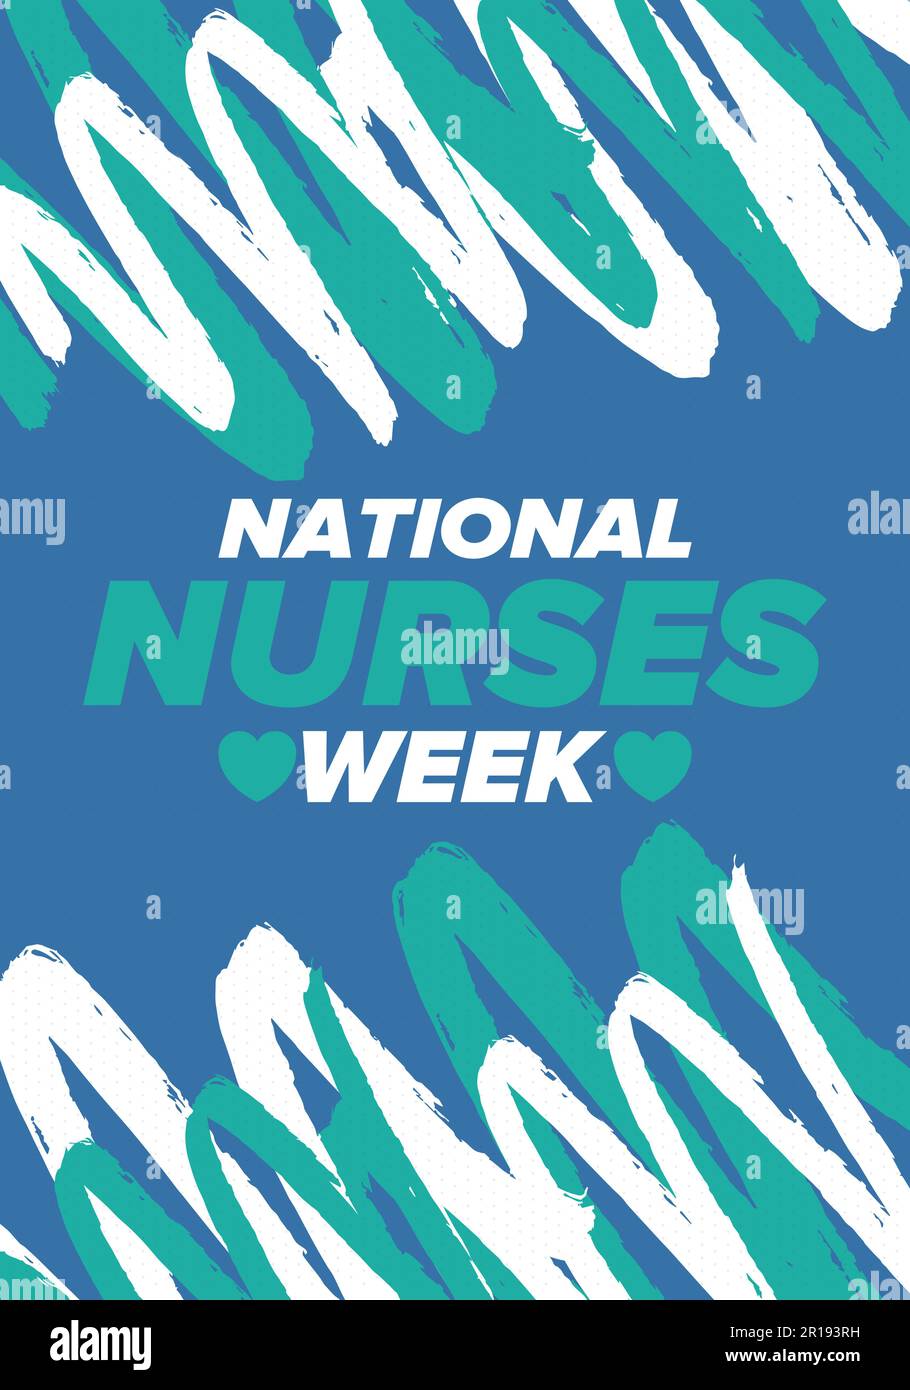 National Nurses Week. Thank you nurses. Medical and health care